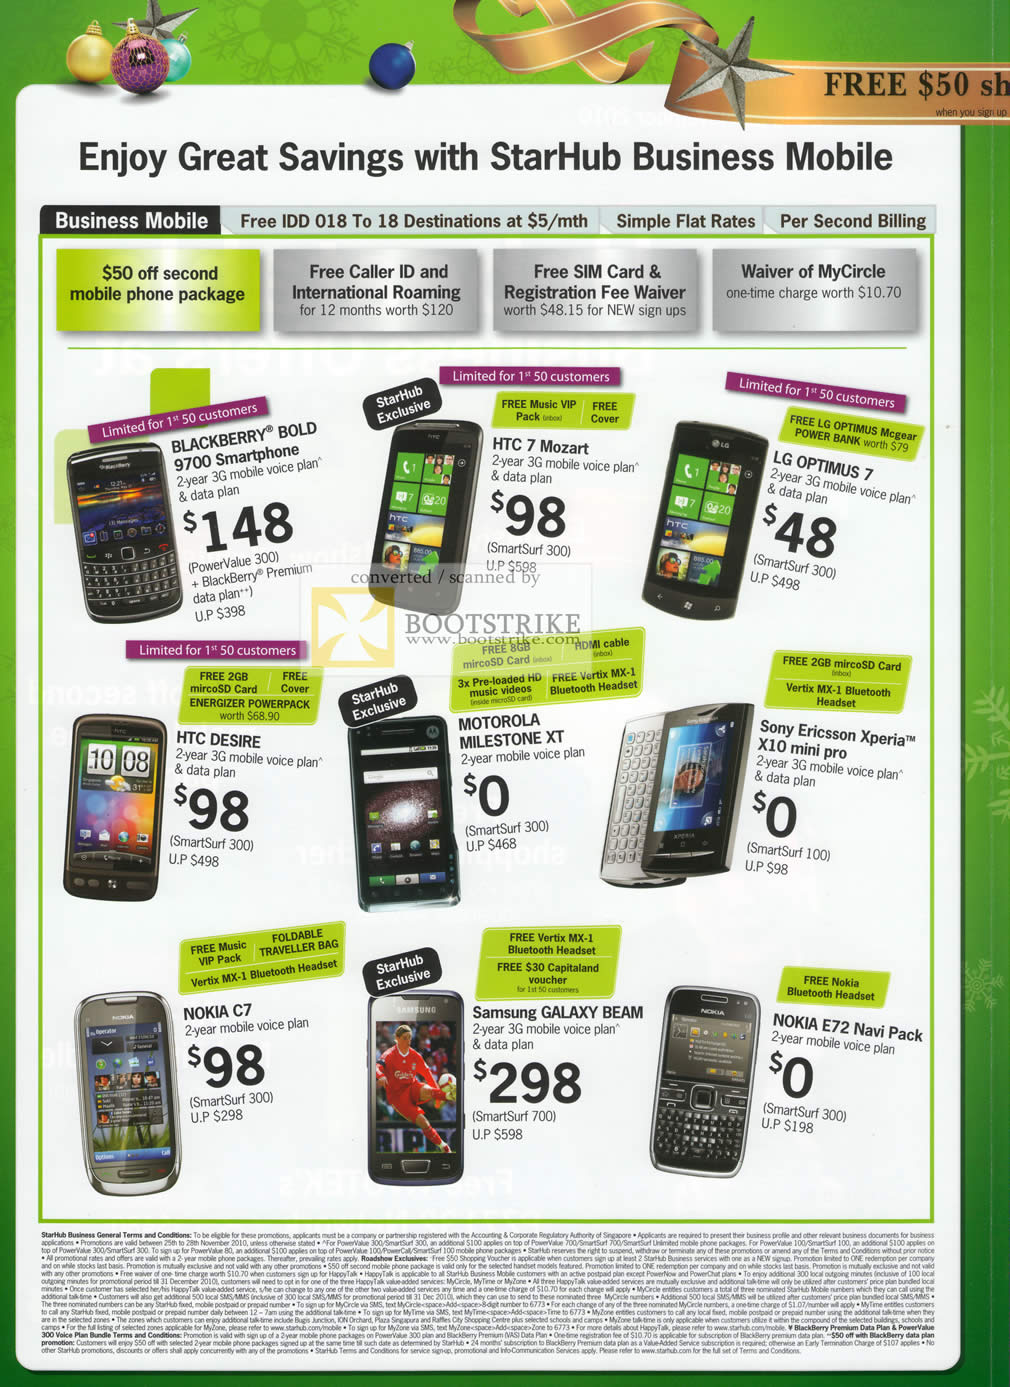 Sitex 2010 price list image brochure of Starhub Business Mobile Phones Blackberry HTC 7 Mozard Motorola Sony Ericsson Nokia C7 Galaxy Beam E72